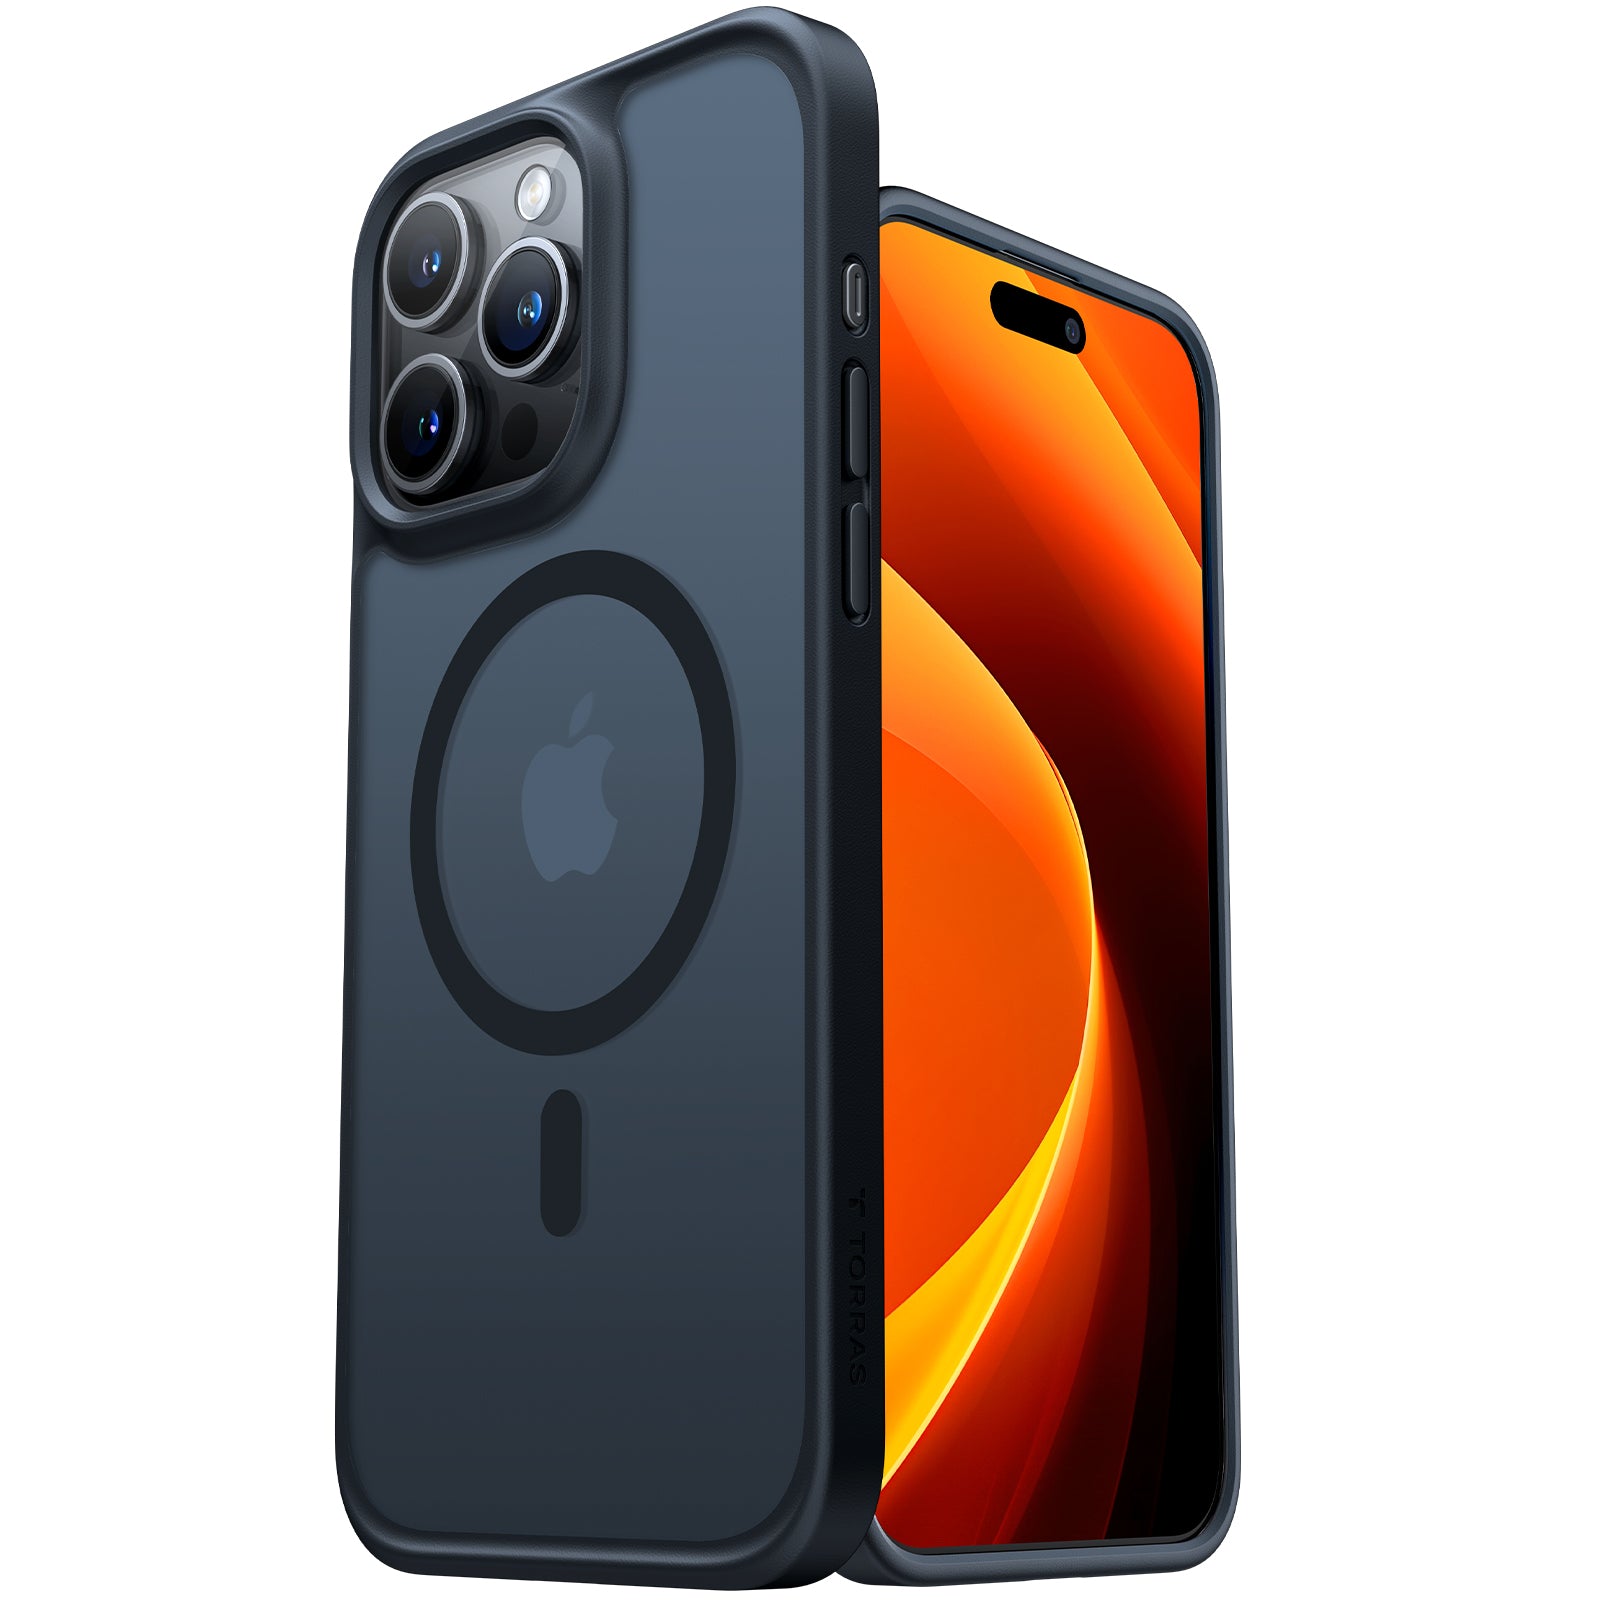 iPhone 15 Pro Max Magsafe Case - Guardian - TORRAS